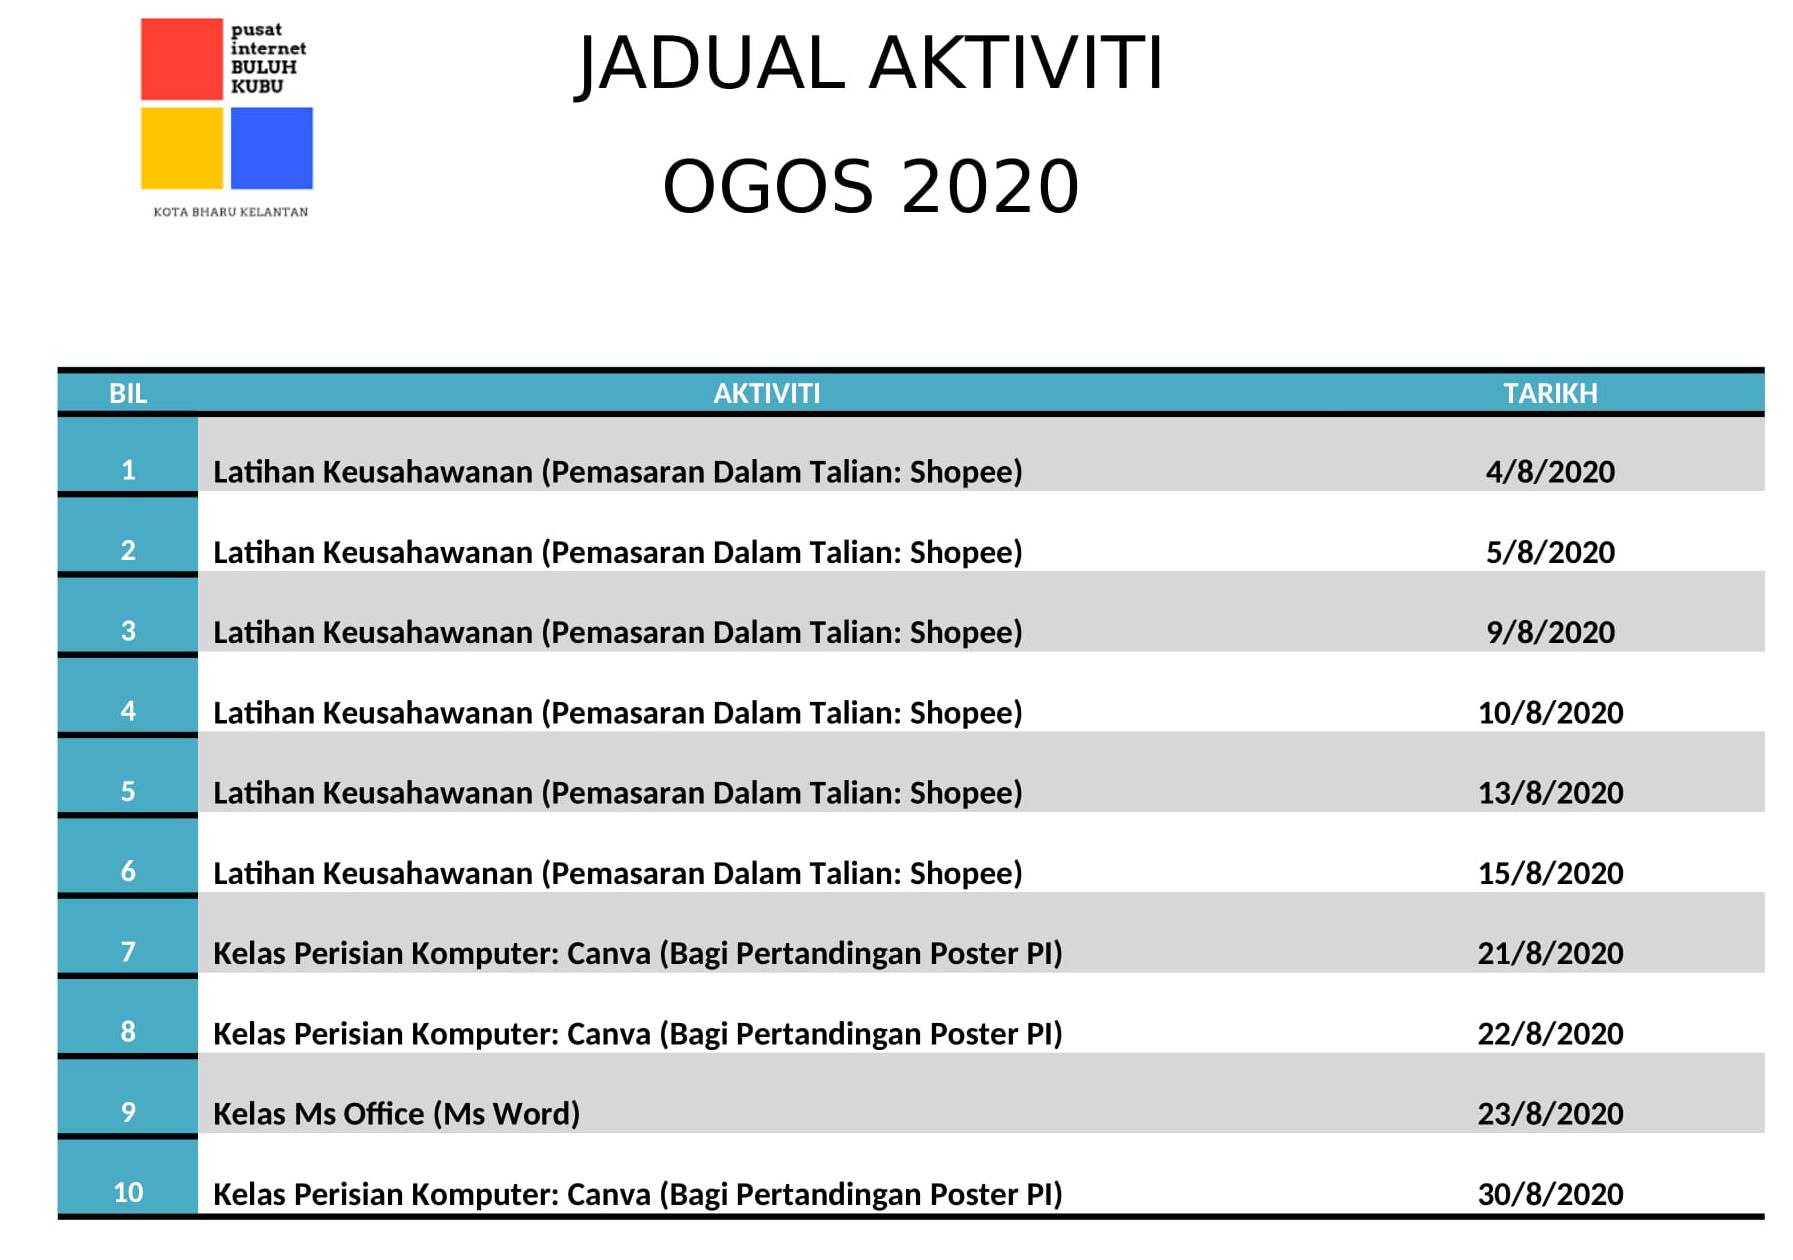 JADUAL AKTIVITI OGOS 2020 1